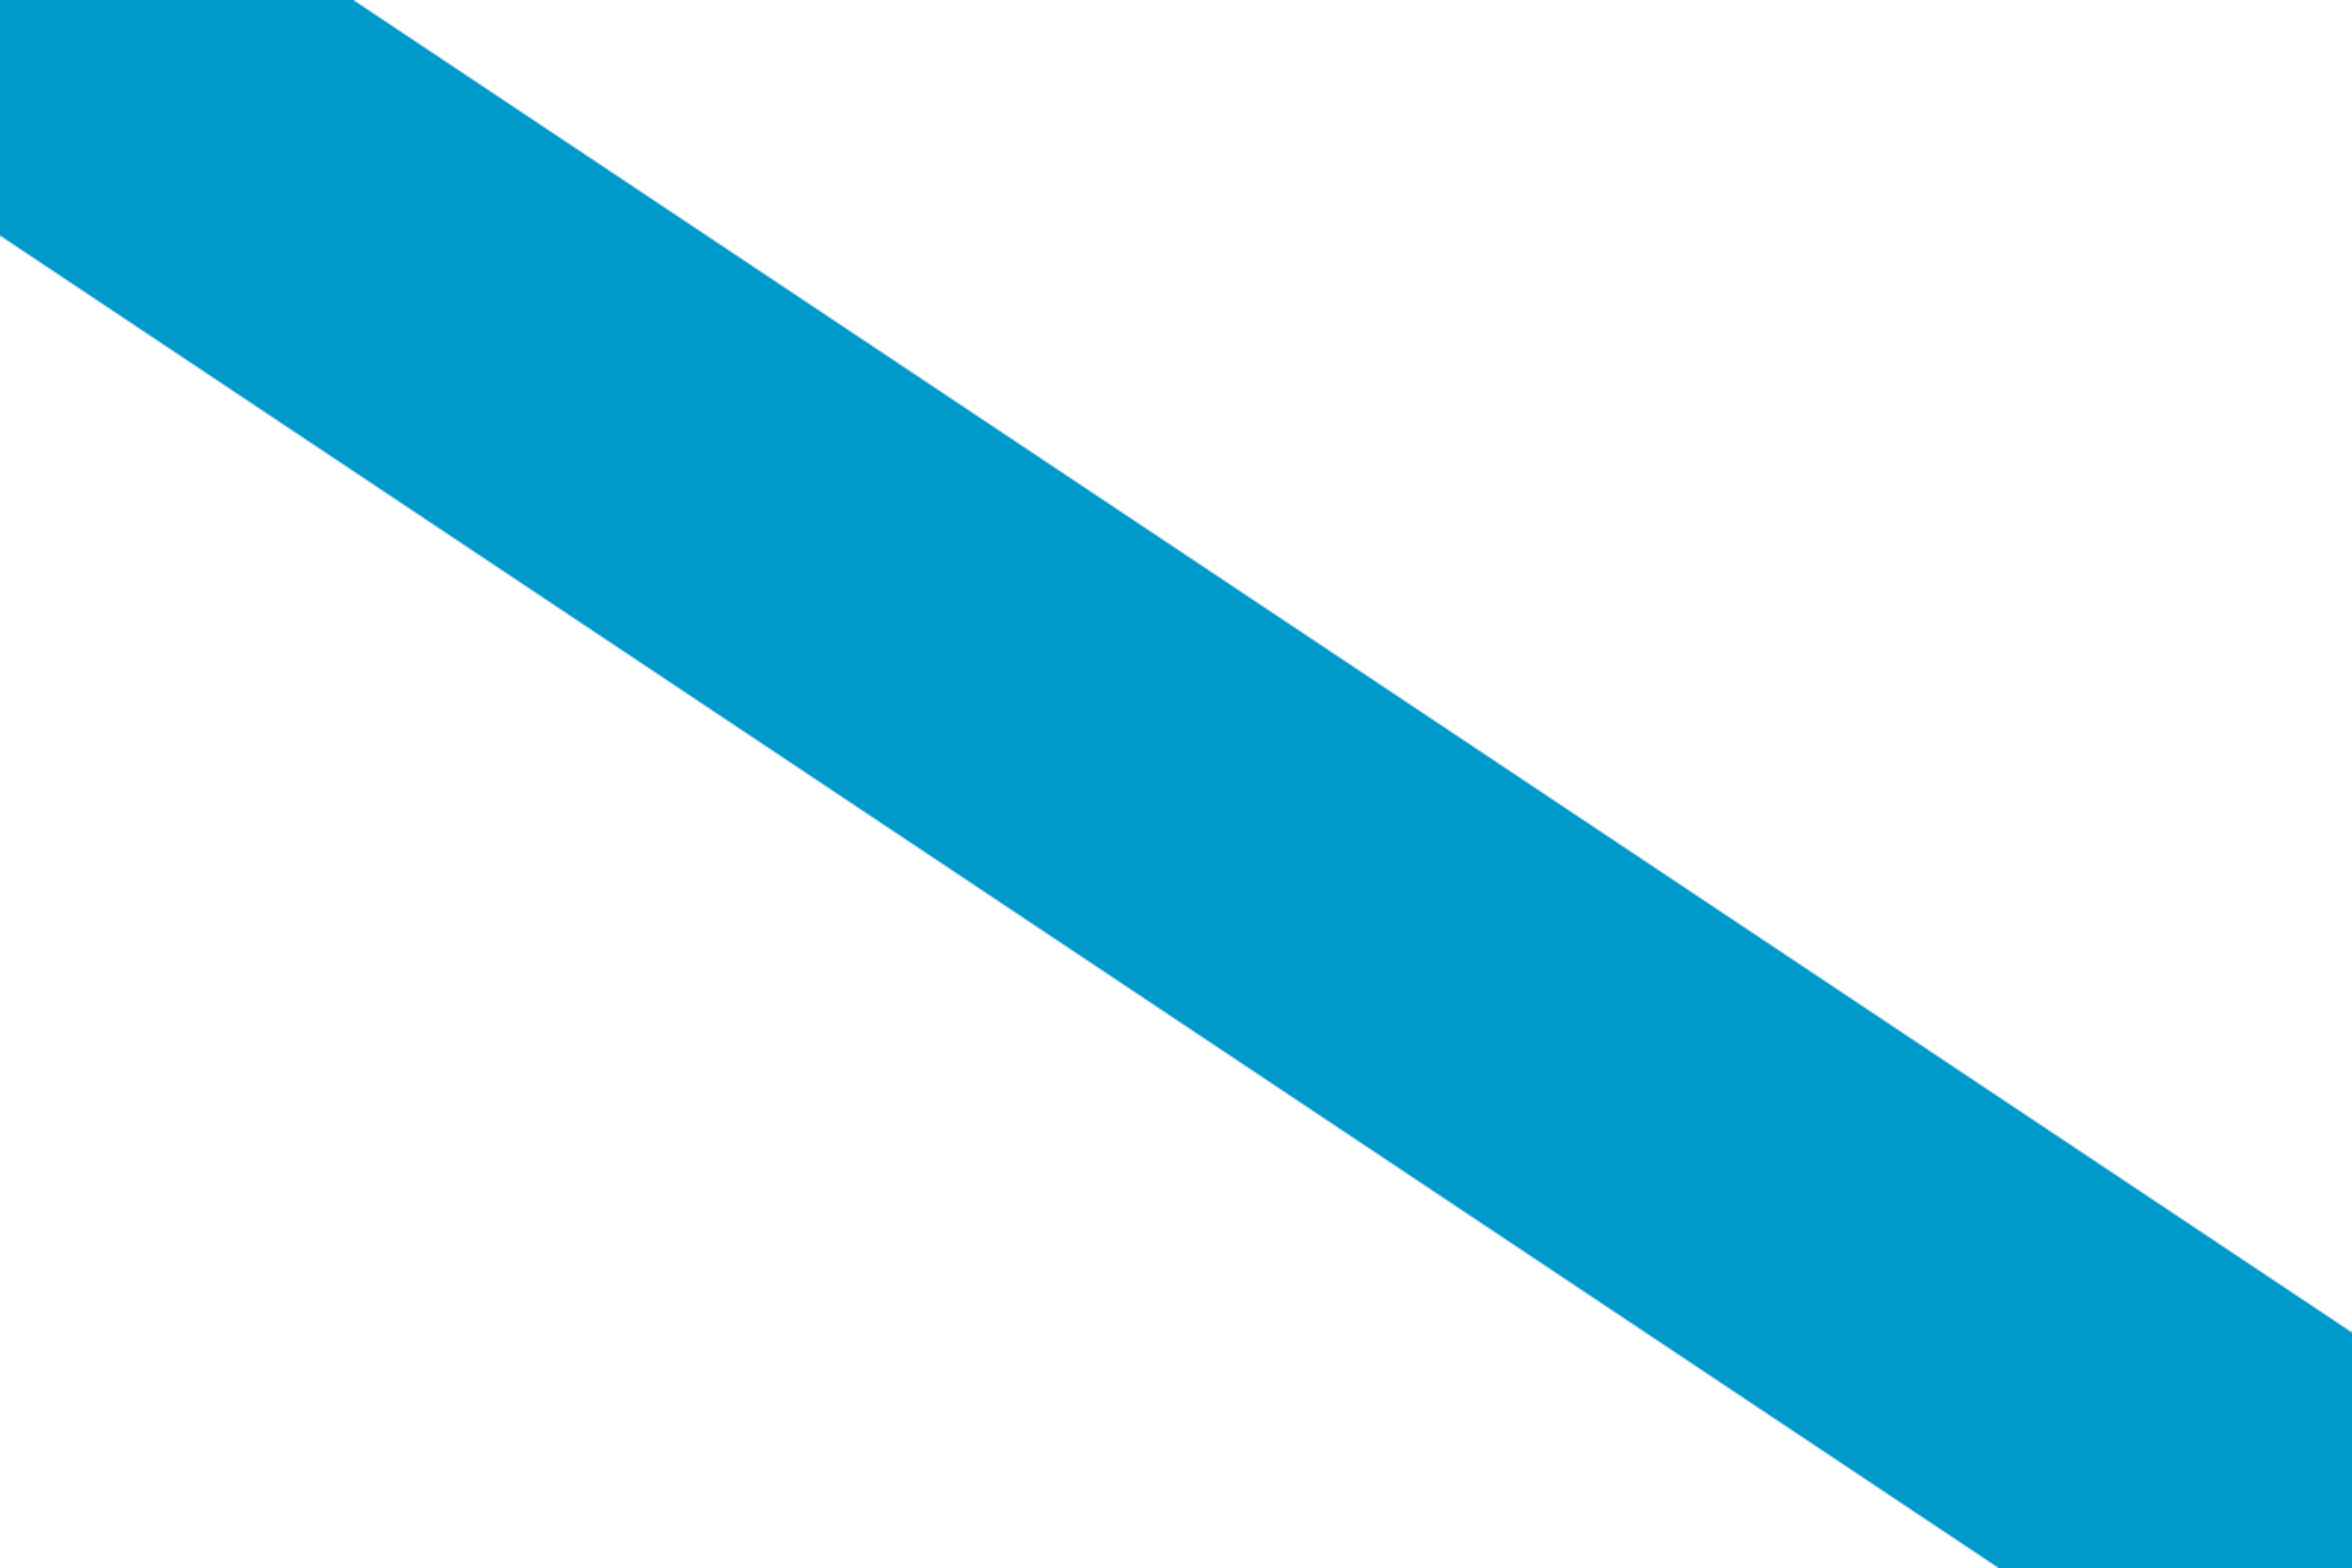 Bandera Galicia